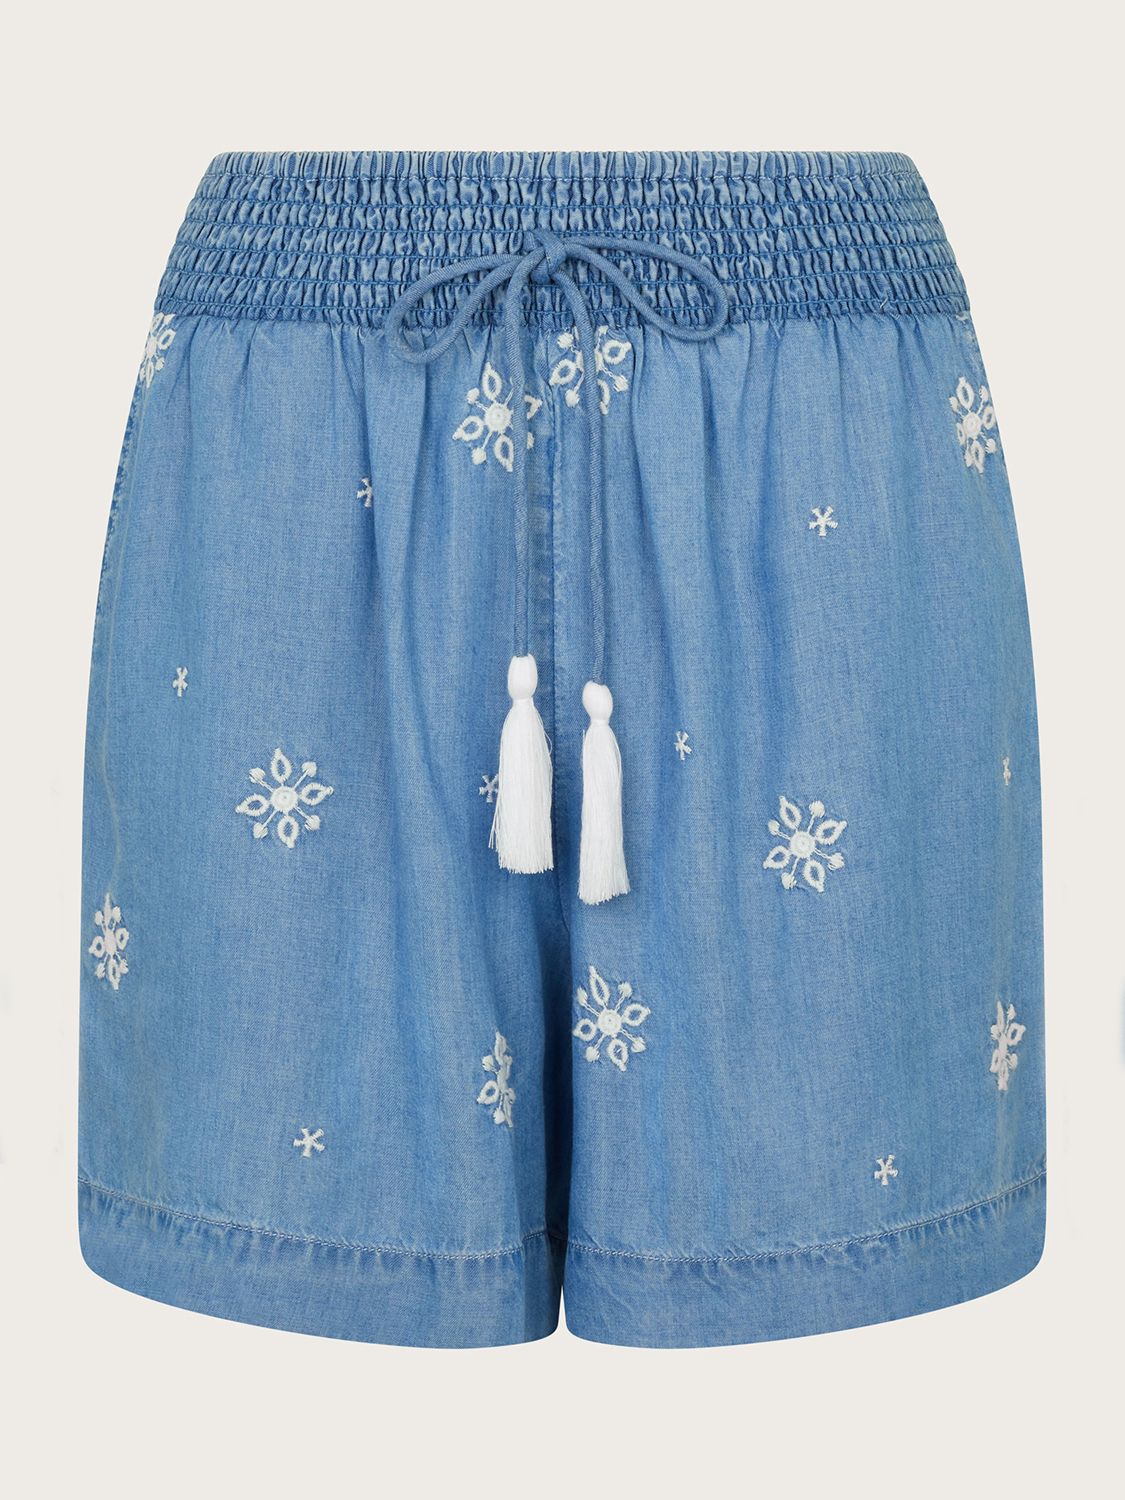 Monsoon Lyrica Embroidered Shorts, Denim Blue, S